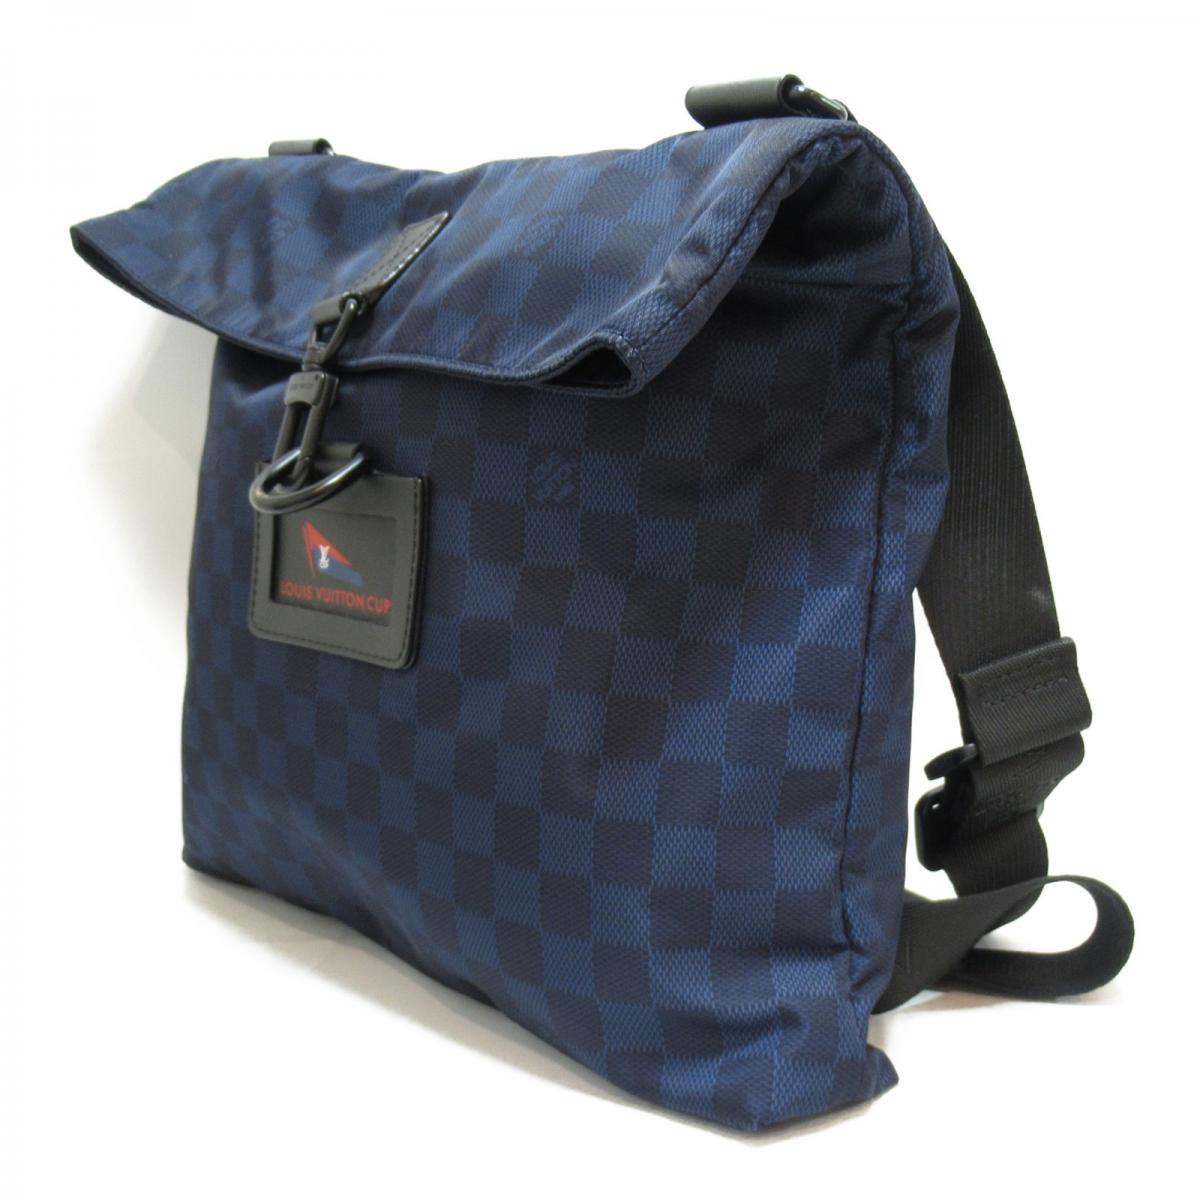 LOUIS VUITTON N41251 LV Cup Alize Damier Crossbody Shoulder Bag Blue [Used]